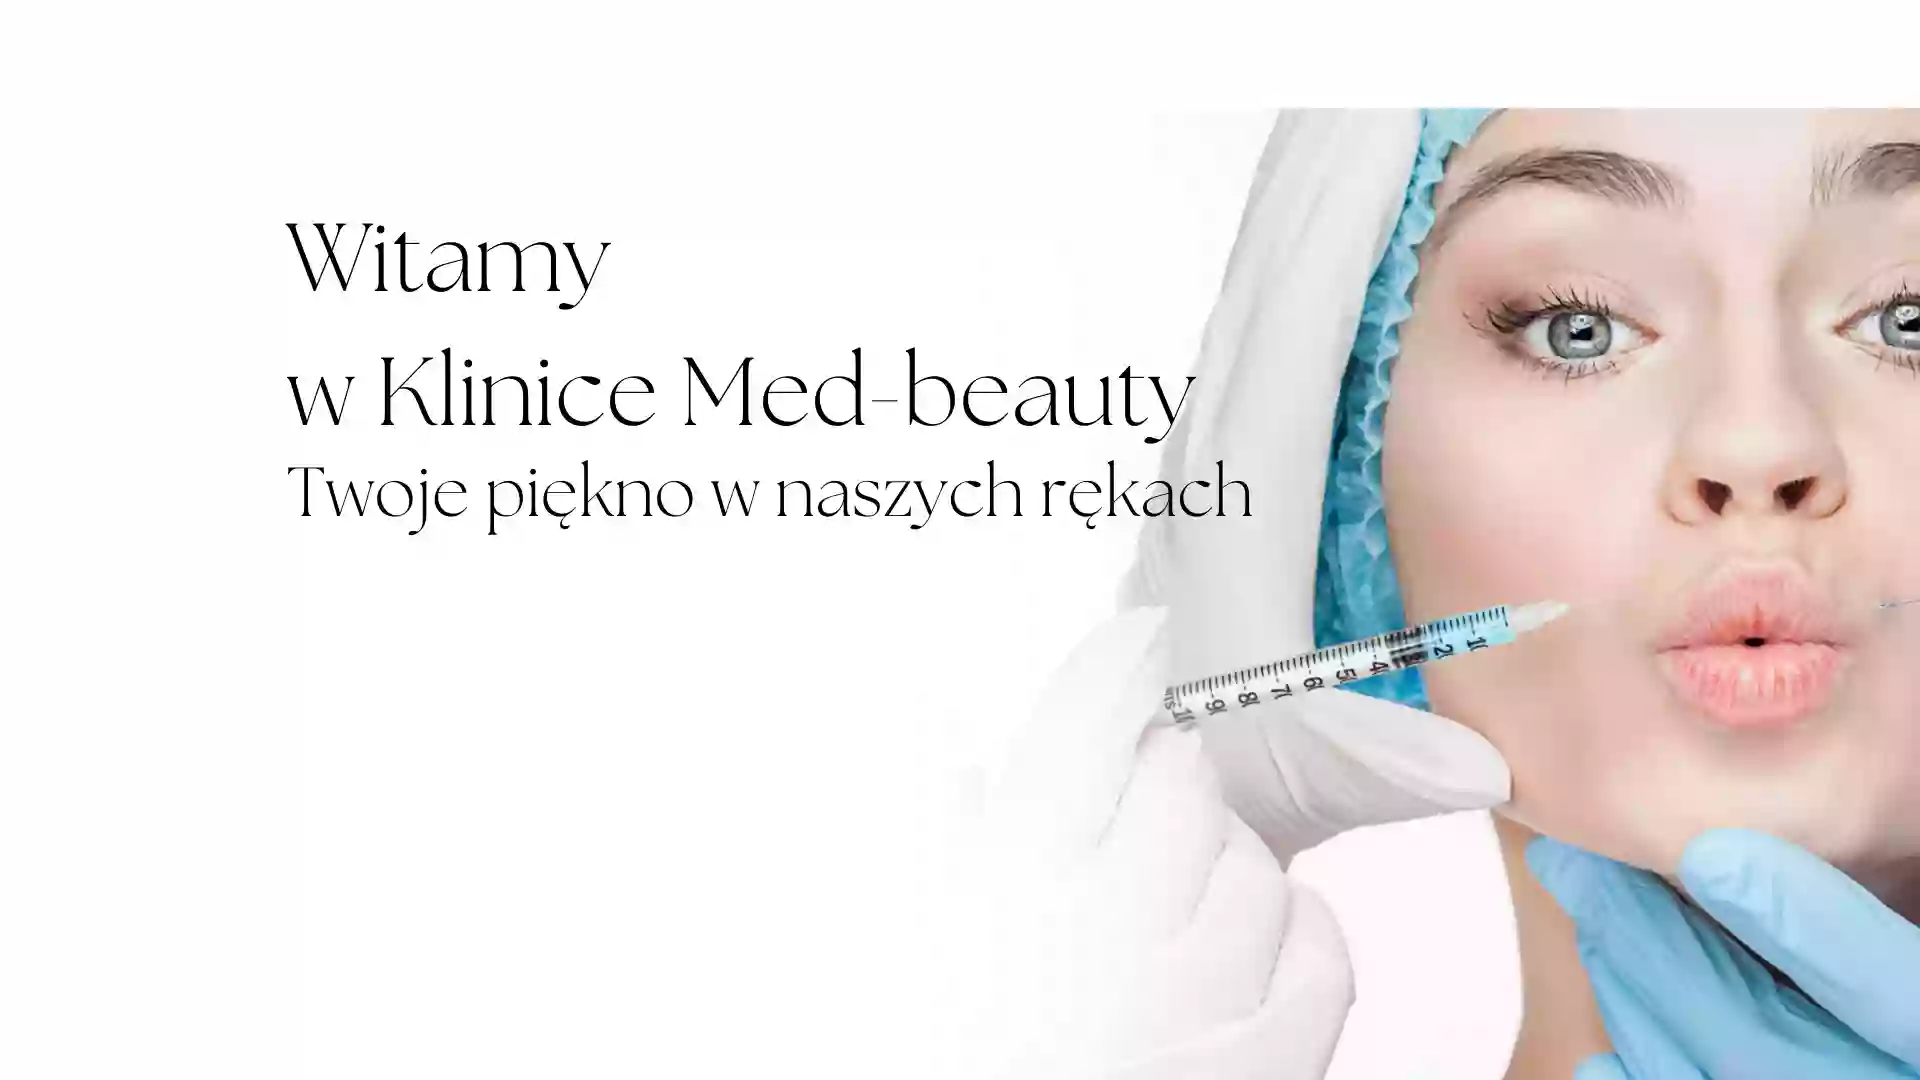 Med-beauty Grażyna Walkowicz